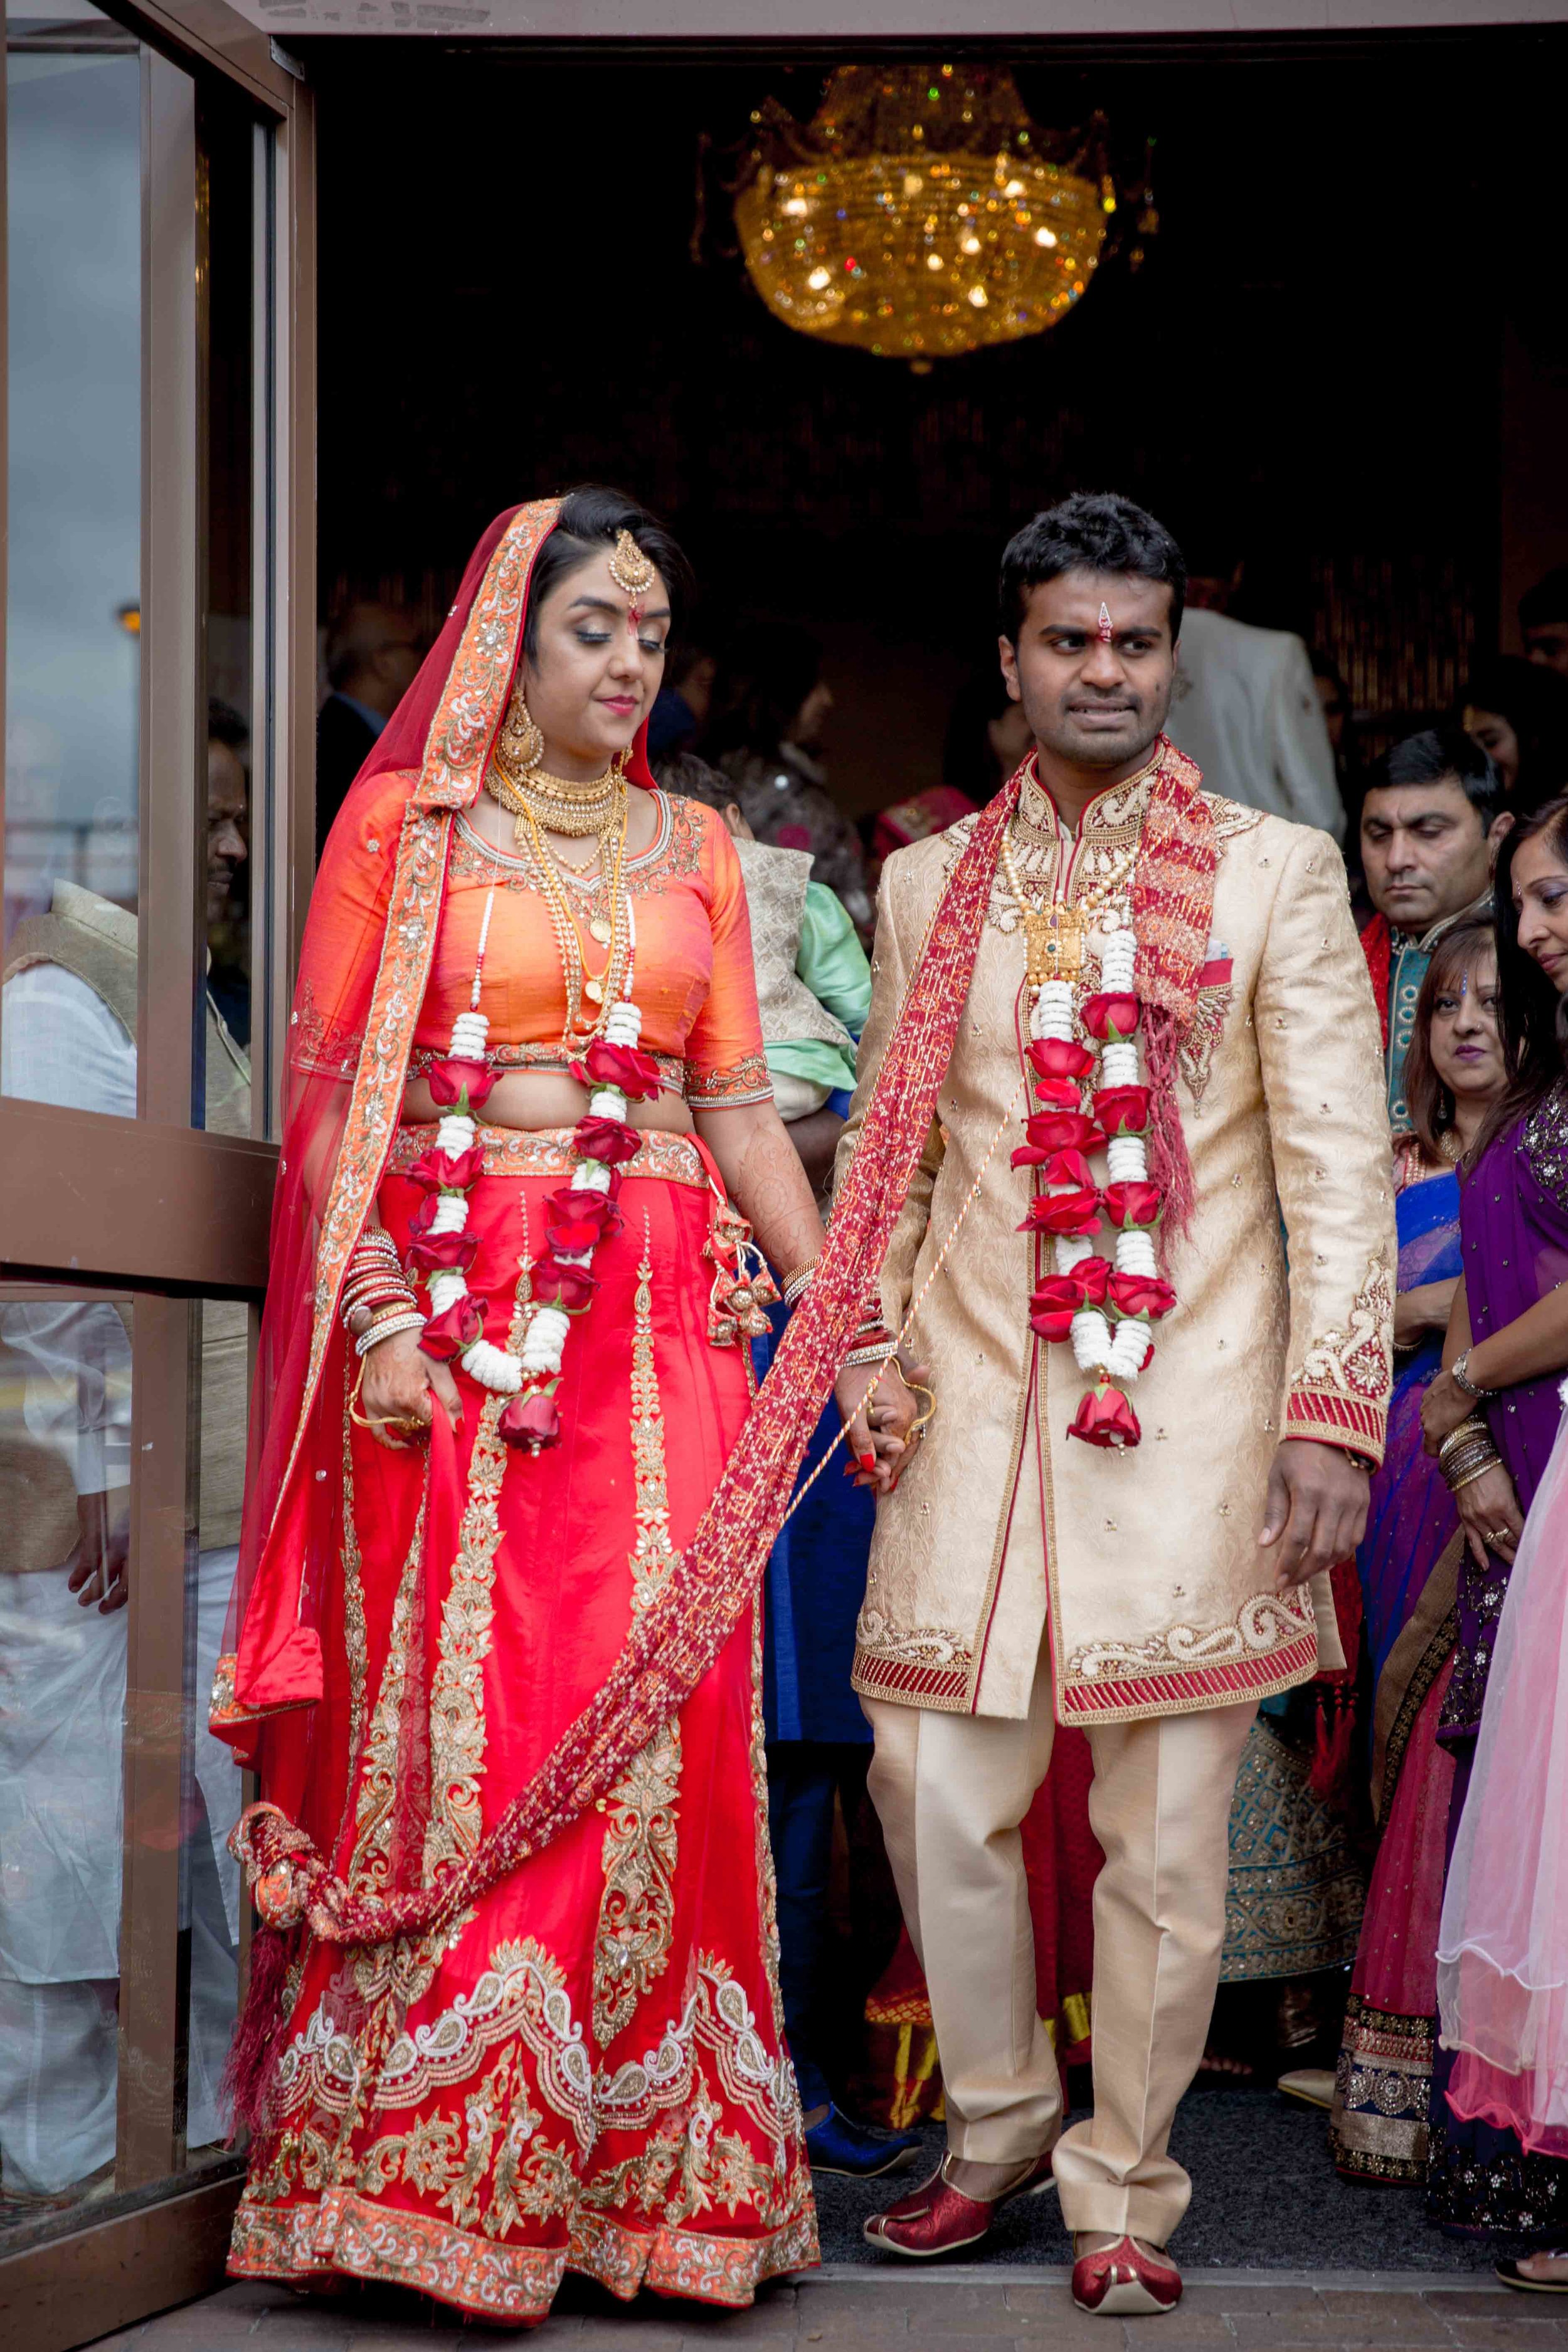 premier-banquetting-london-Hindu-asian-wedding-photographer-natalia-smith-photography-47.jpg